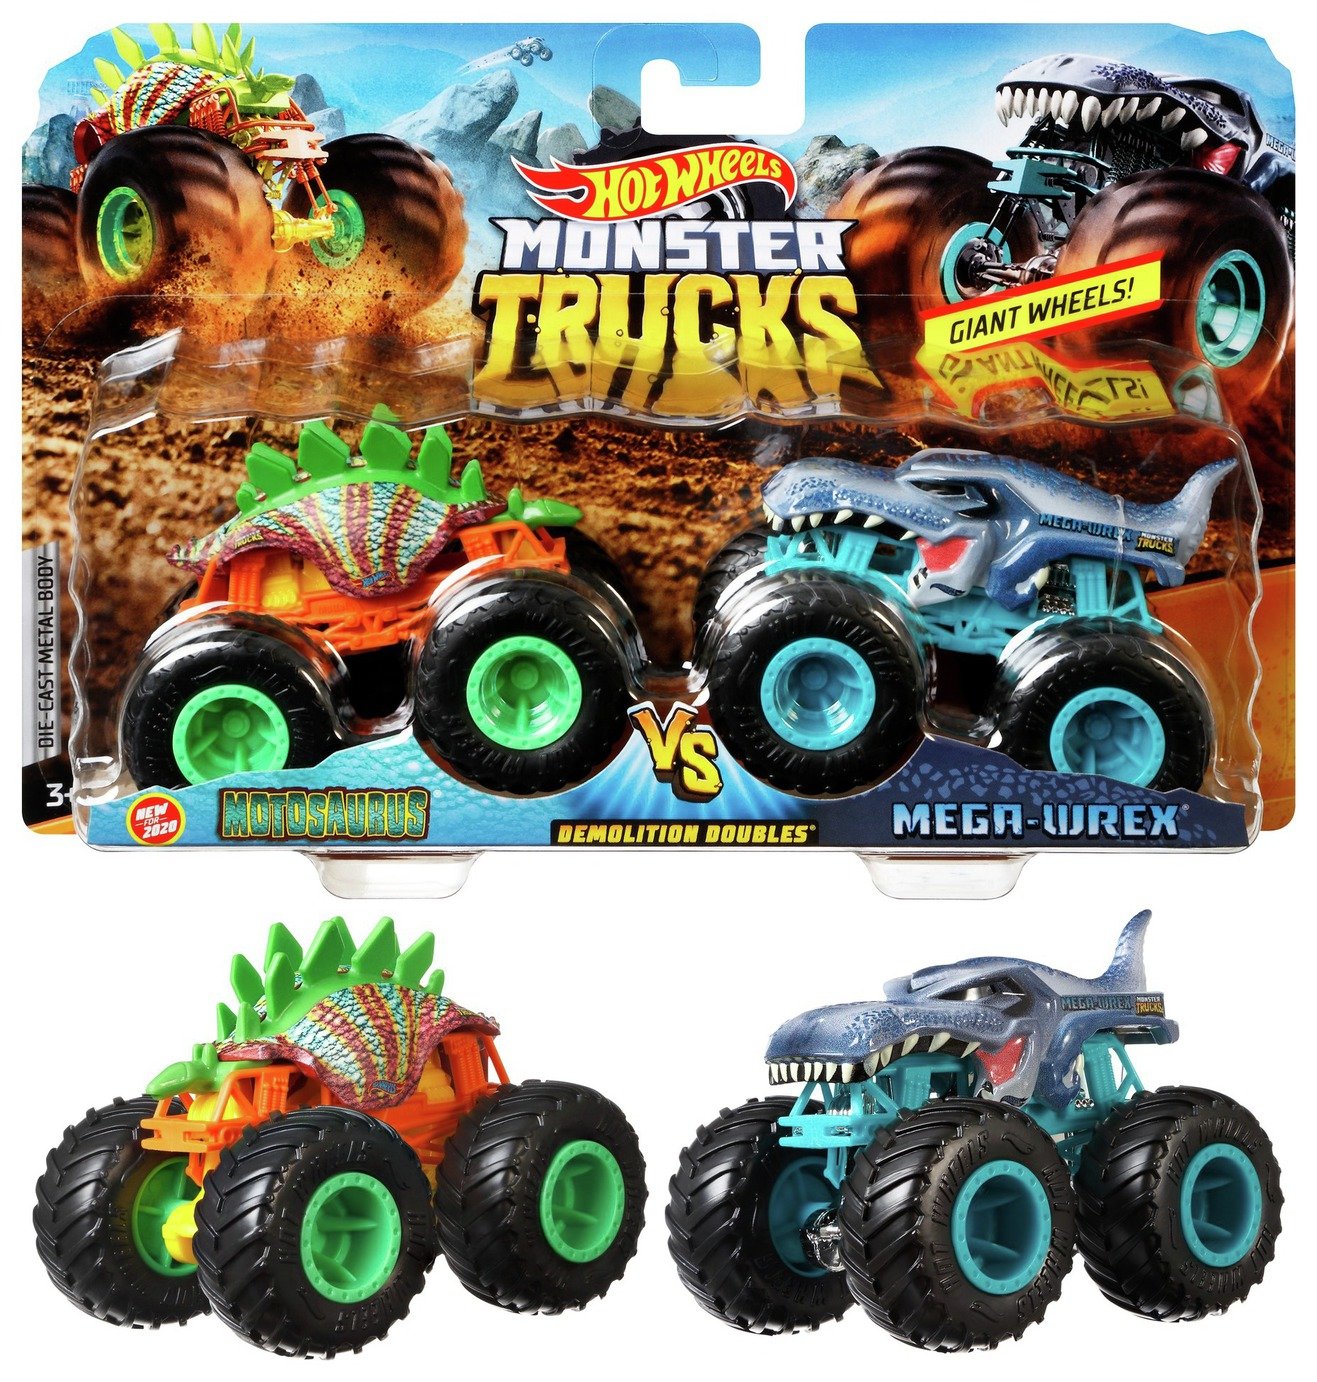 Hot Wheels Monster Trucks Character Vehicles